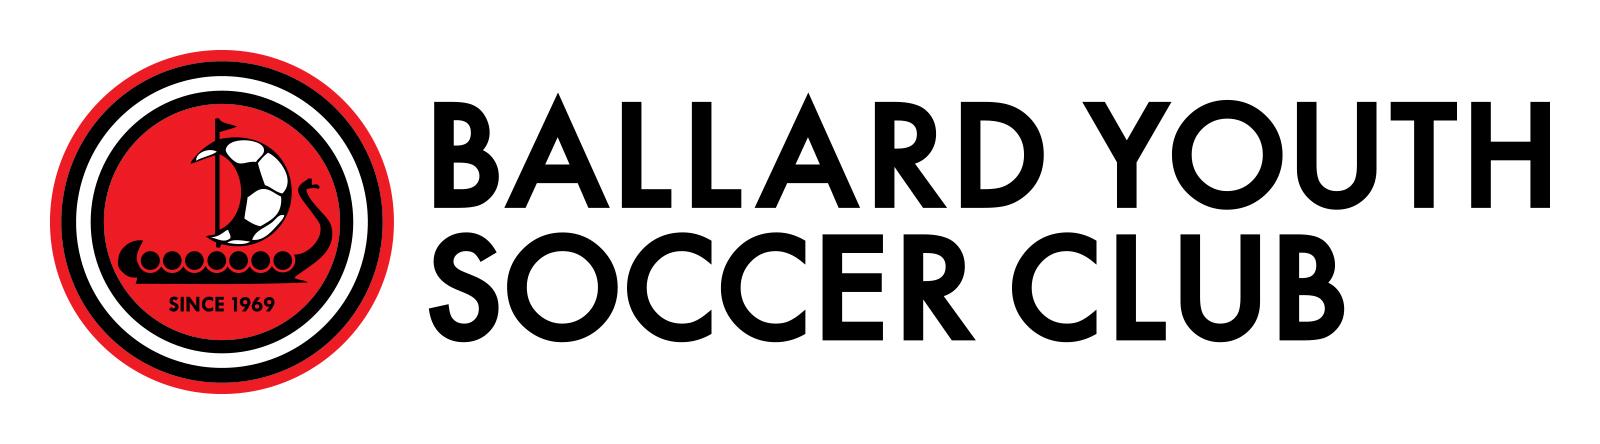 Ballard Youth Soccer Club banner